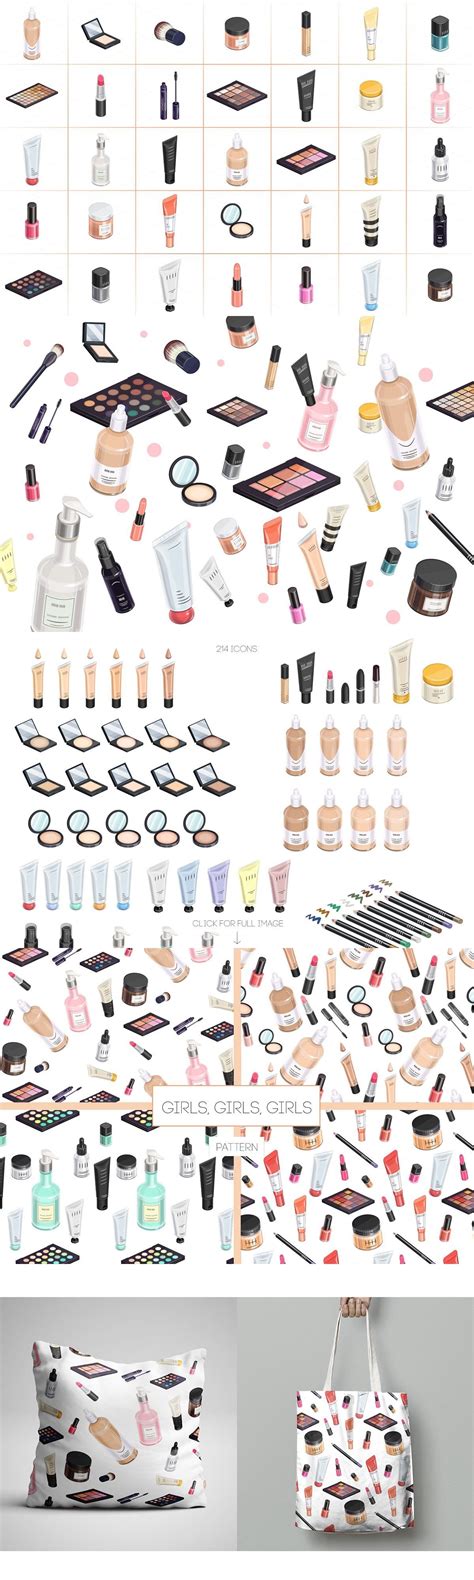 makeup kit fancy illustrations blog template container design